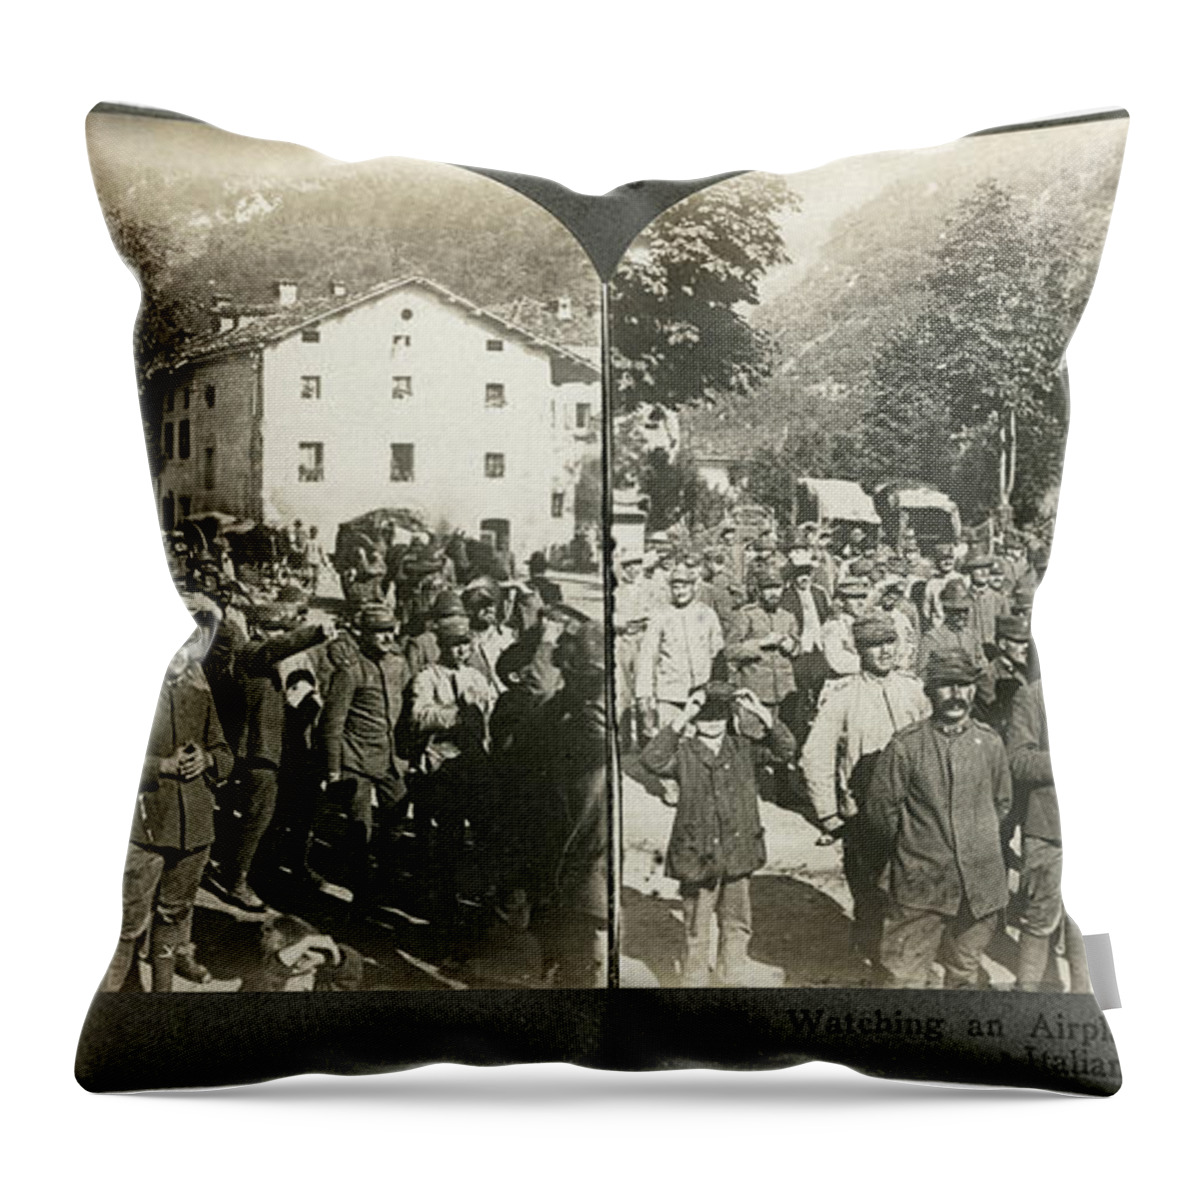 1914 Throw Pillow featuring the photograph World War I: Spectators by Granger